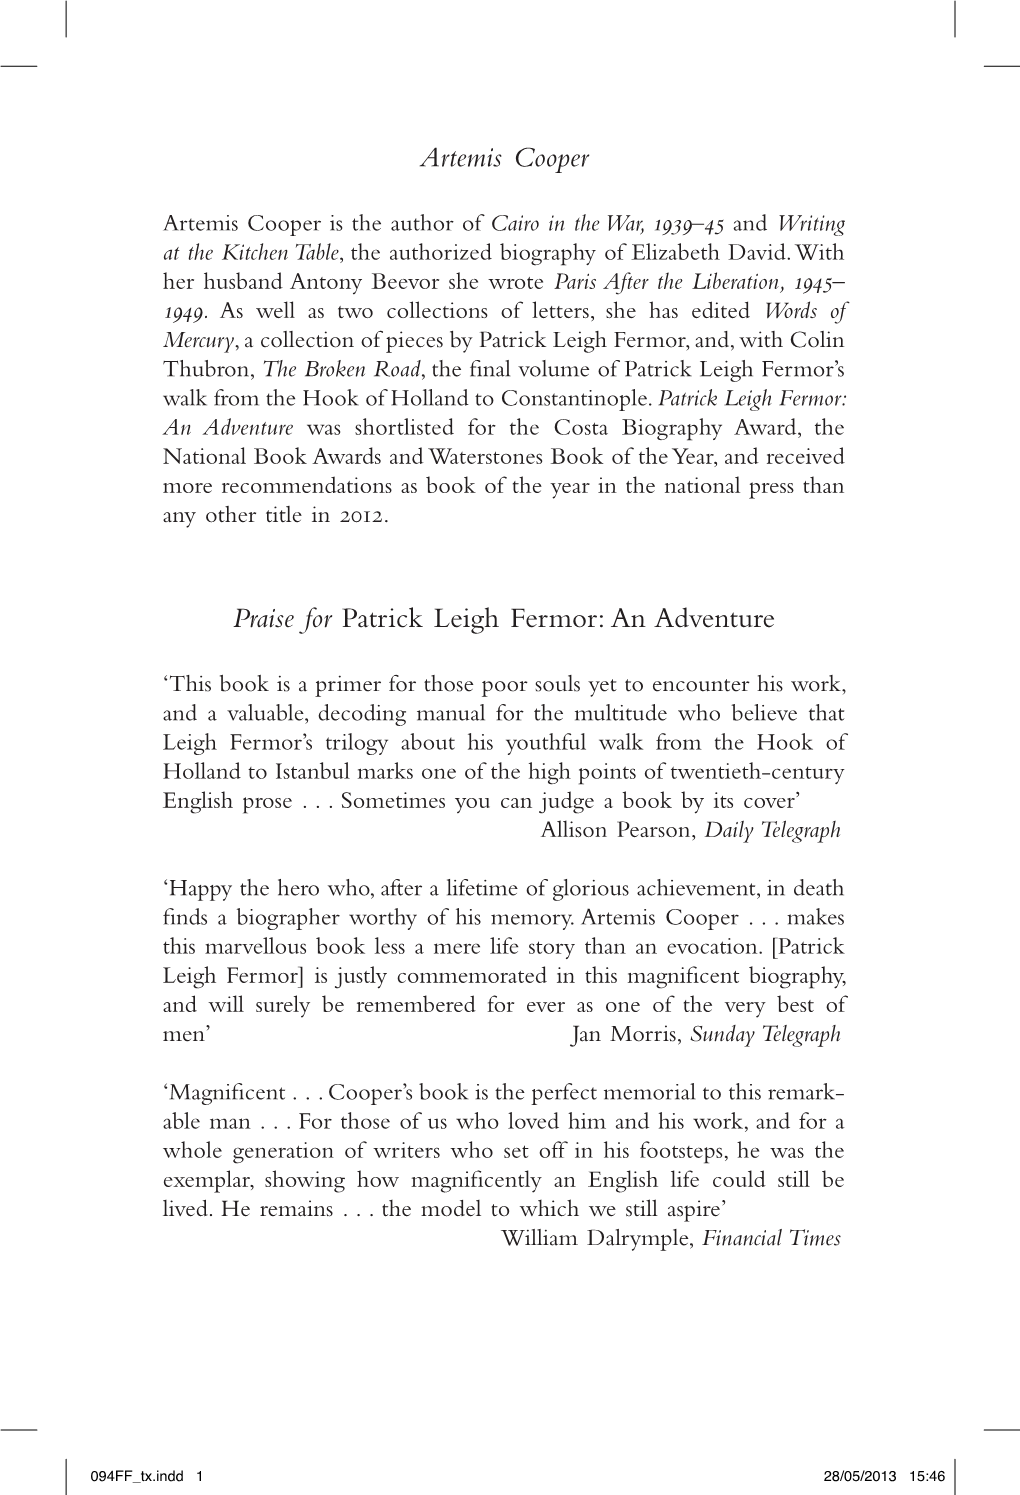 Artemis Cooper Praise for Patrick Leigh Fermor: An